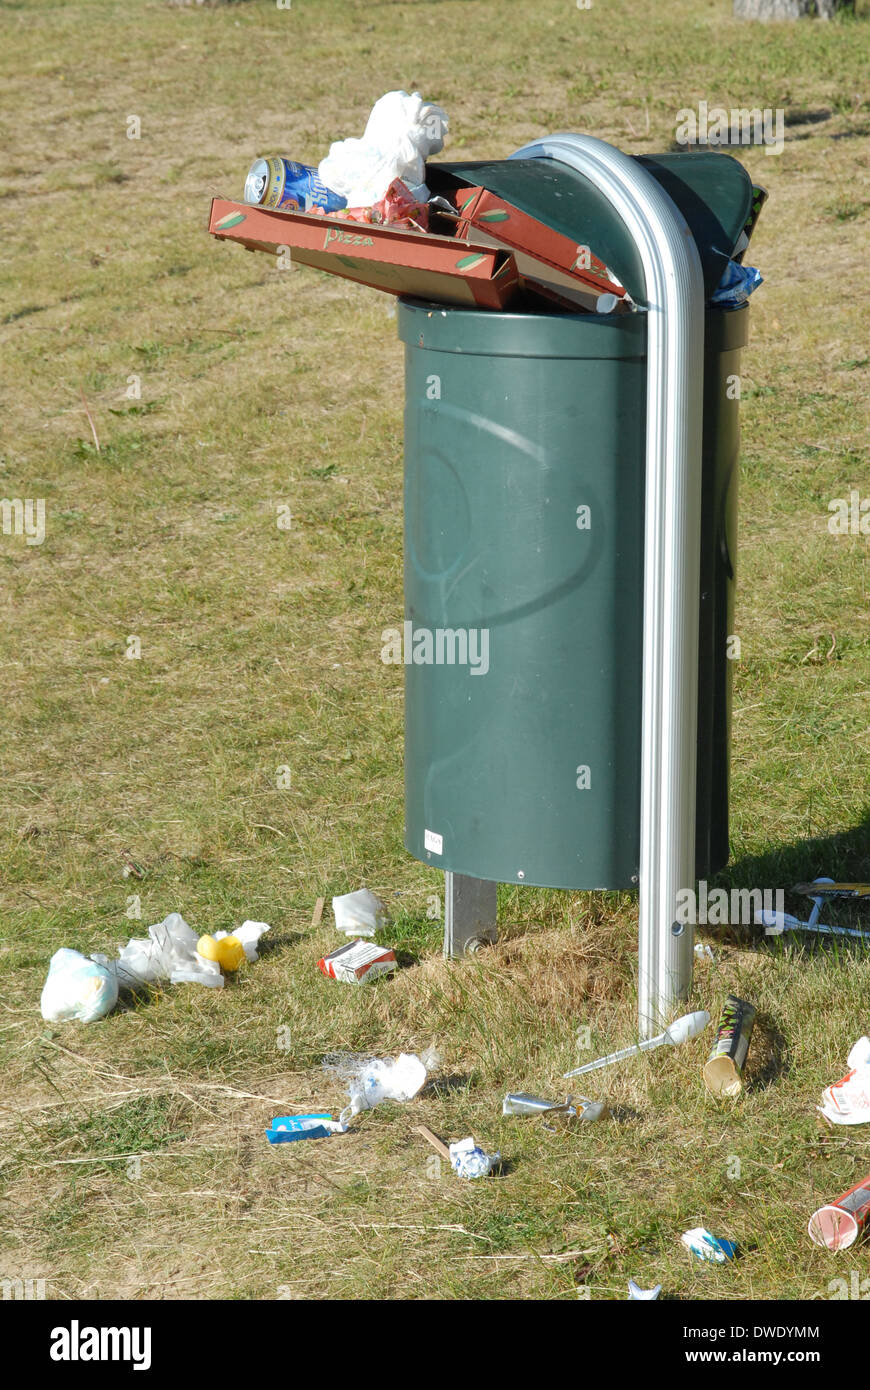 Full rubbish bin, rubbish scattered on grass. Stock Photo